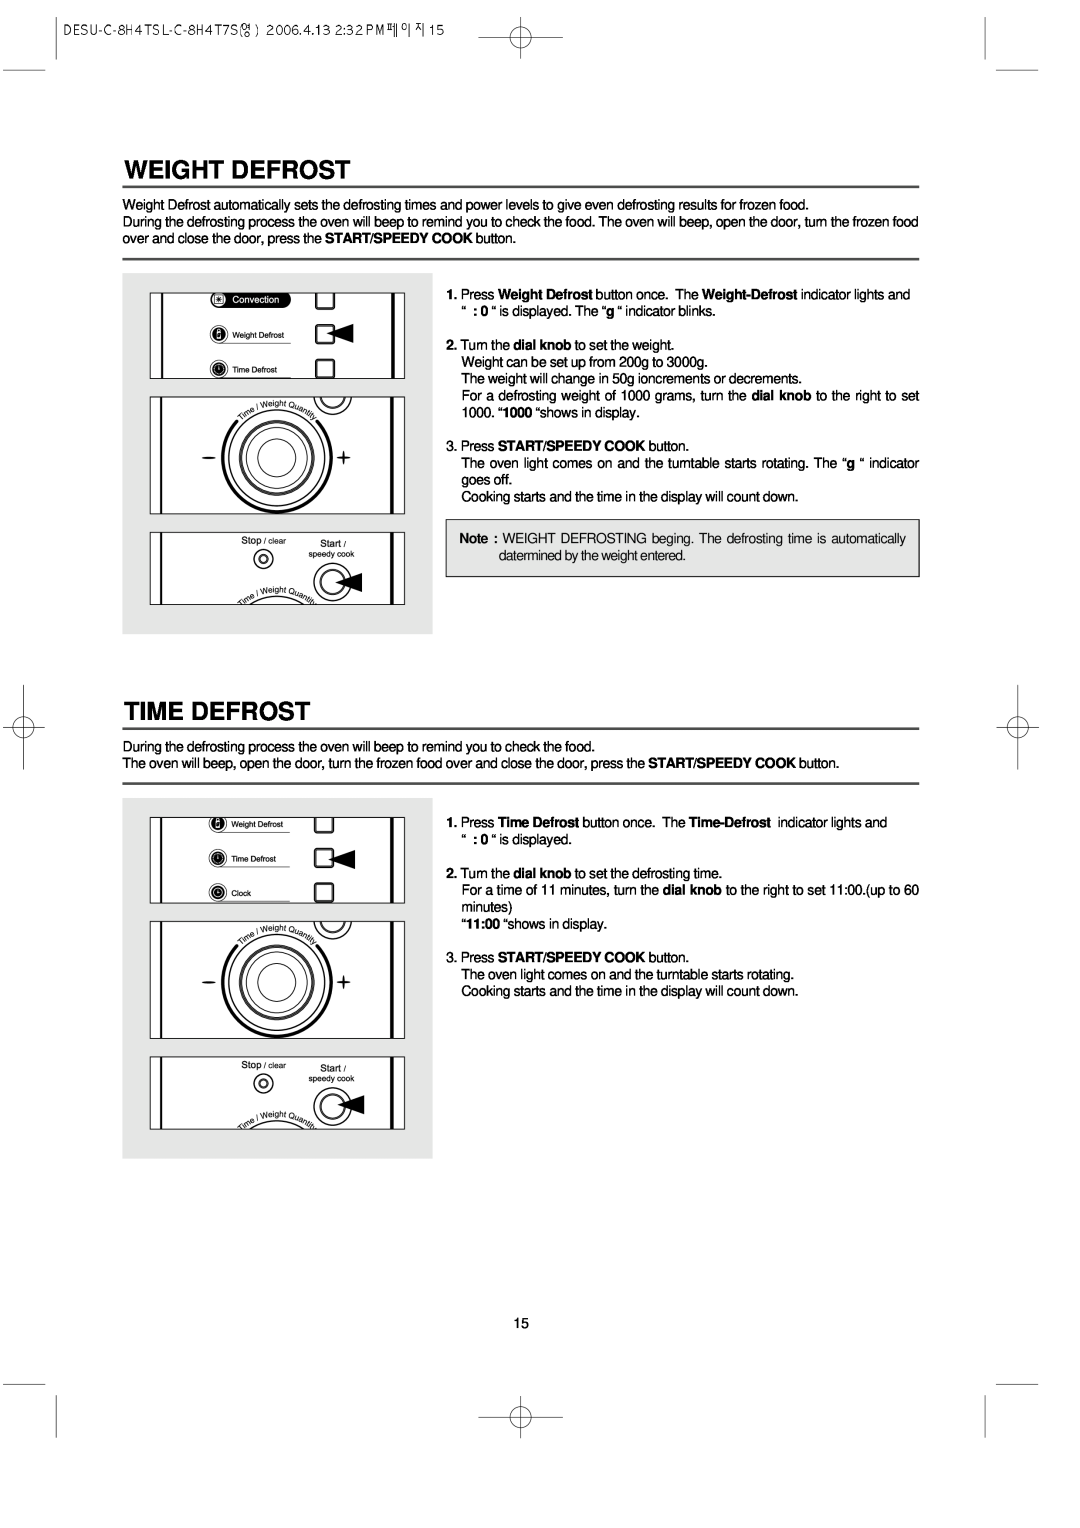 Daewoo KOC-8H4TSL owner manual Weight Defrost, Time Defrost, Press START/SPEEDY COOK button 